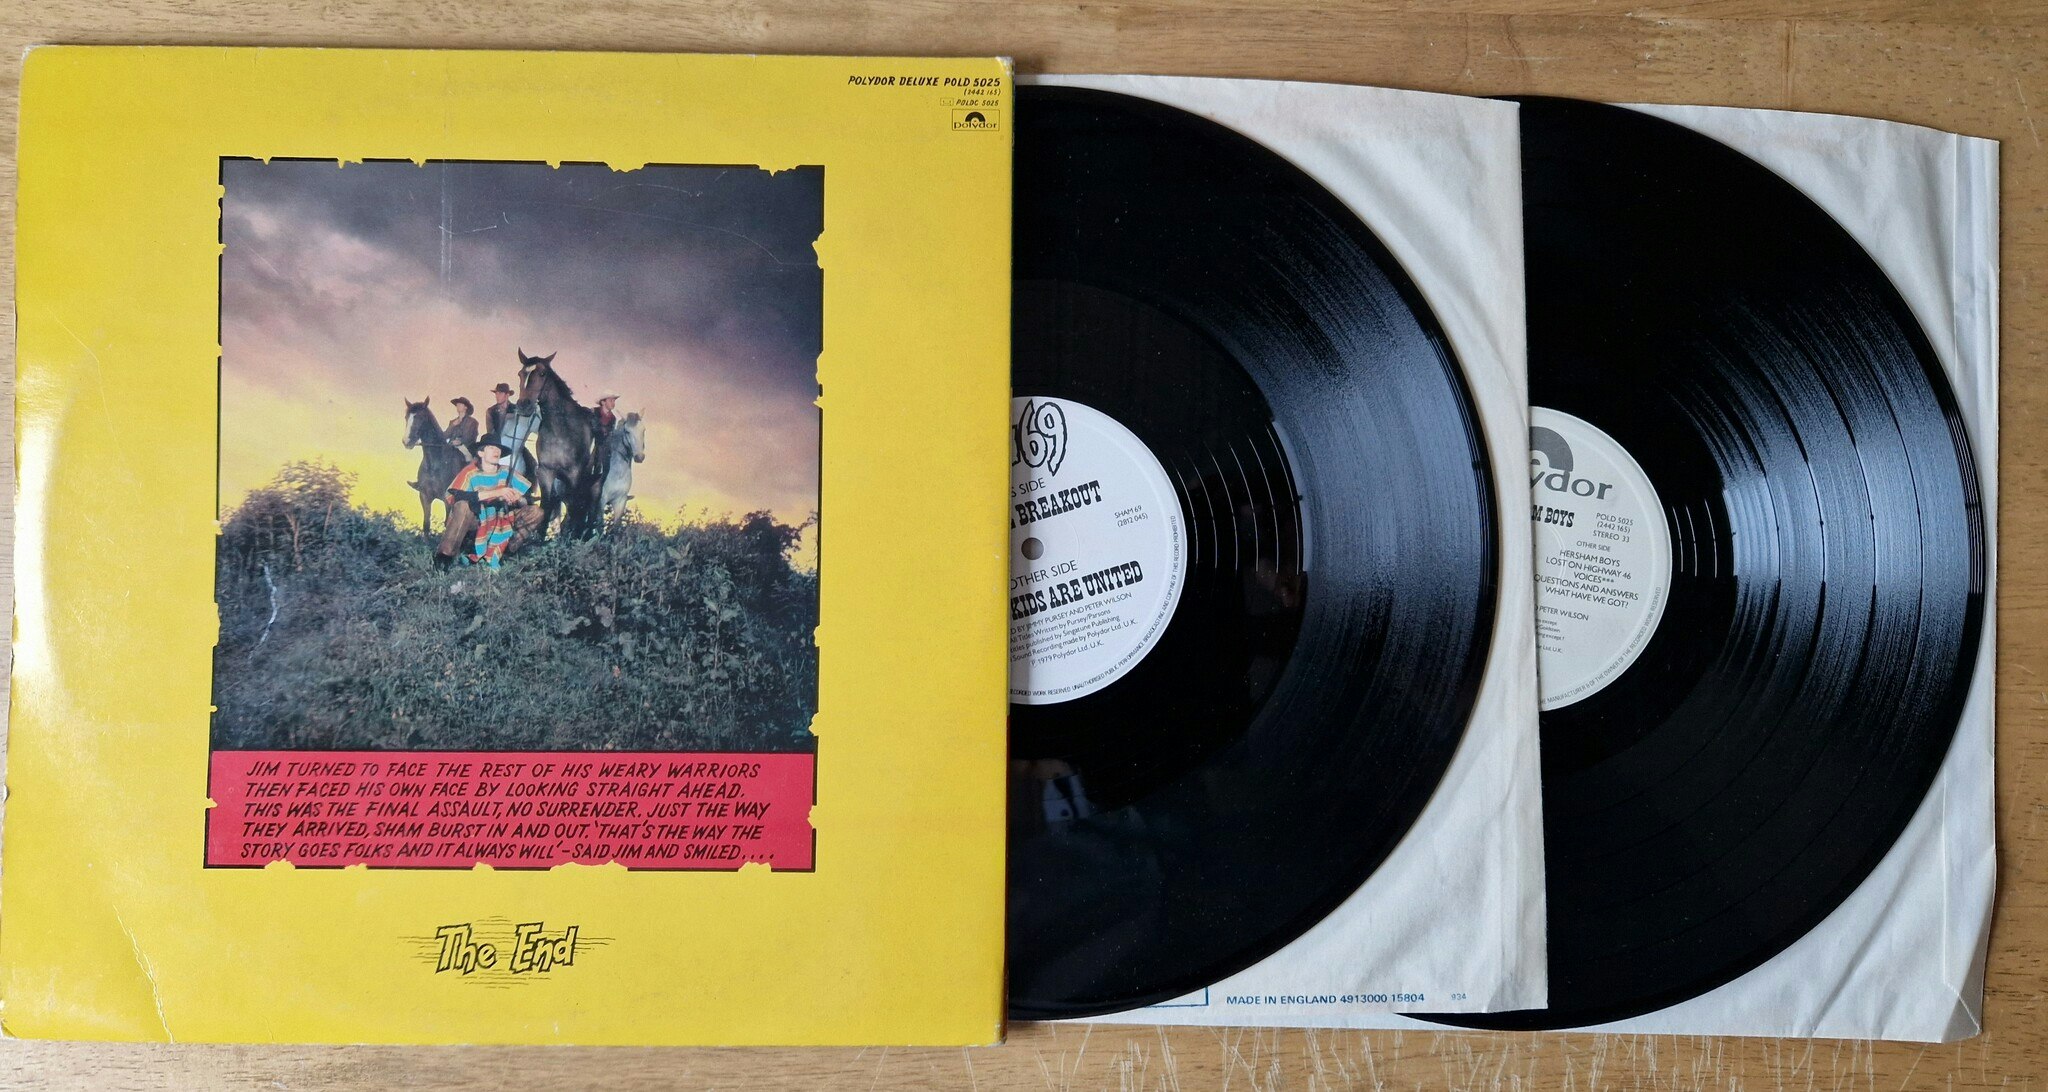 Sham 69, The Adventures of Hersham Boys. Vinyl 2LP